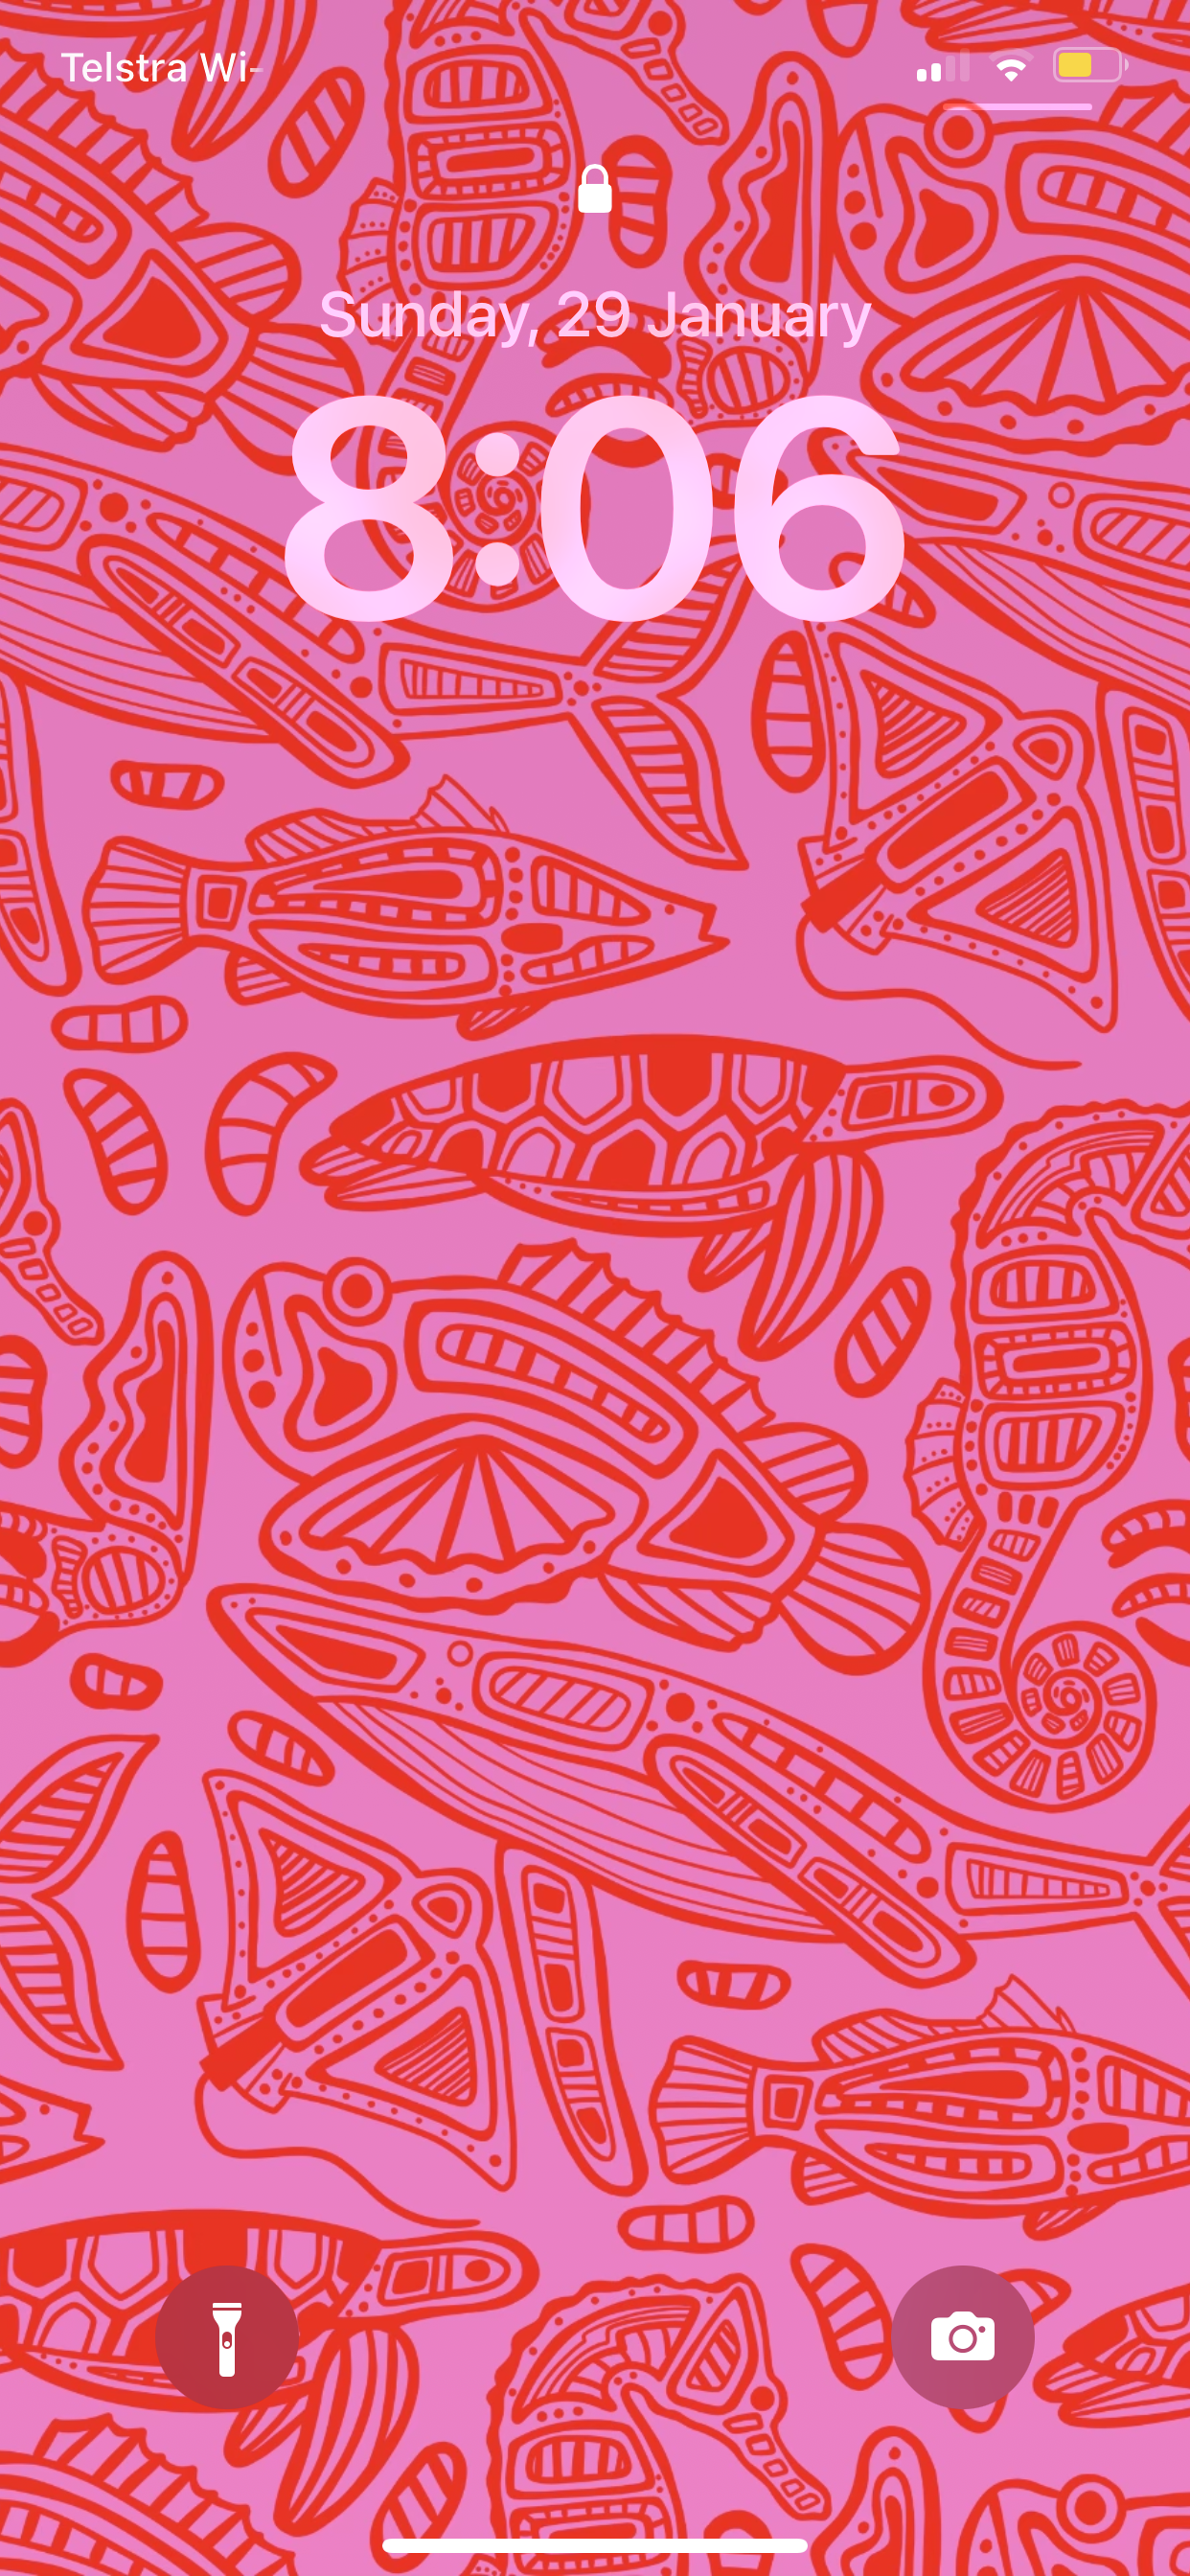 Underwater Red and Pink - Phone Wallpaper Digital Download